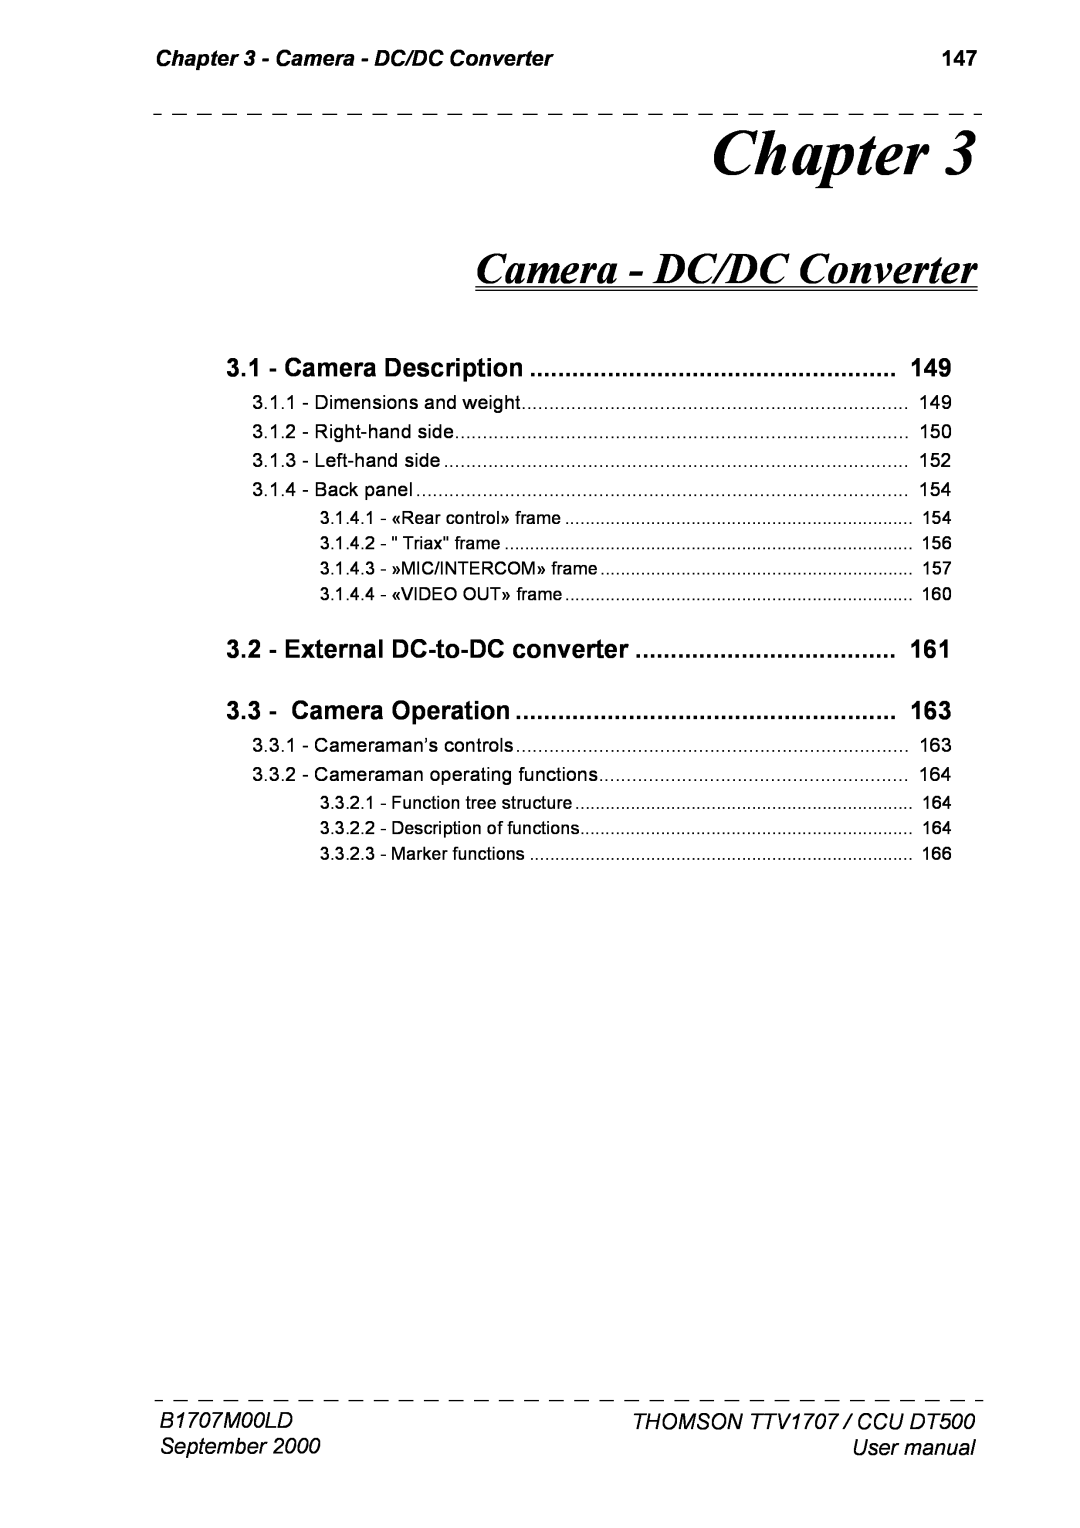 Technicolor - Thomson CAMERA TTV 1707, CCU DT 500 Camera - DC/DC Converter, Chapter, B1707M00LD, September, User manual 